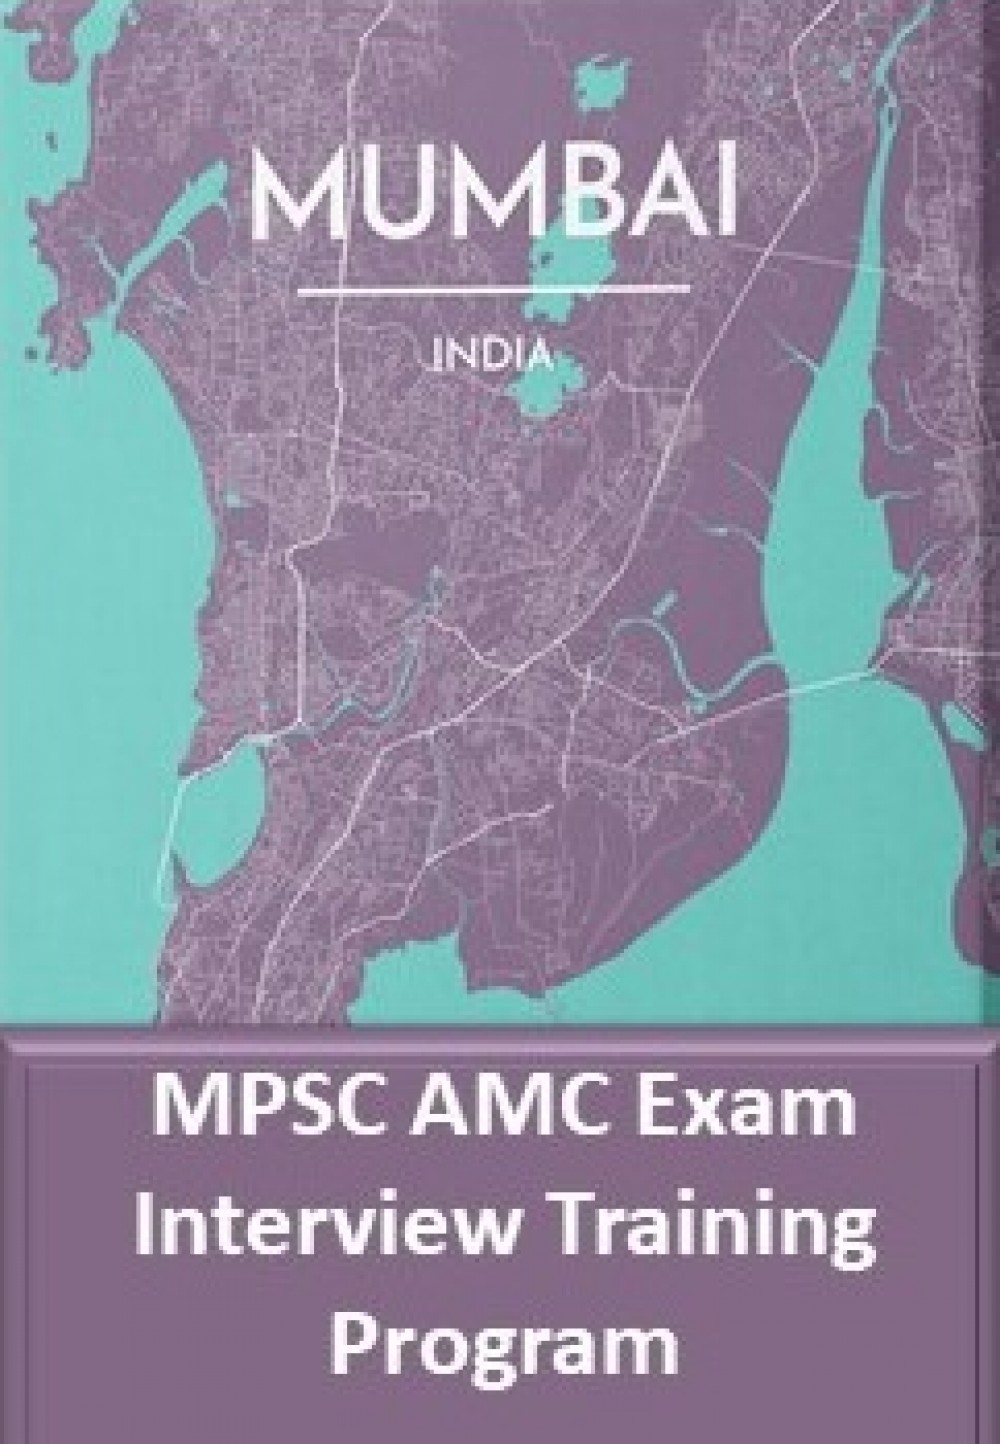 AMC Exam Interview Training Program